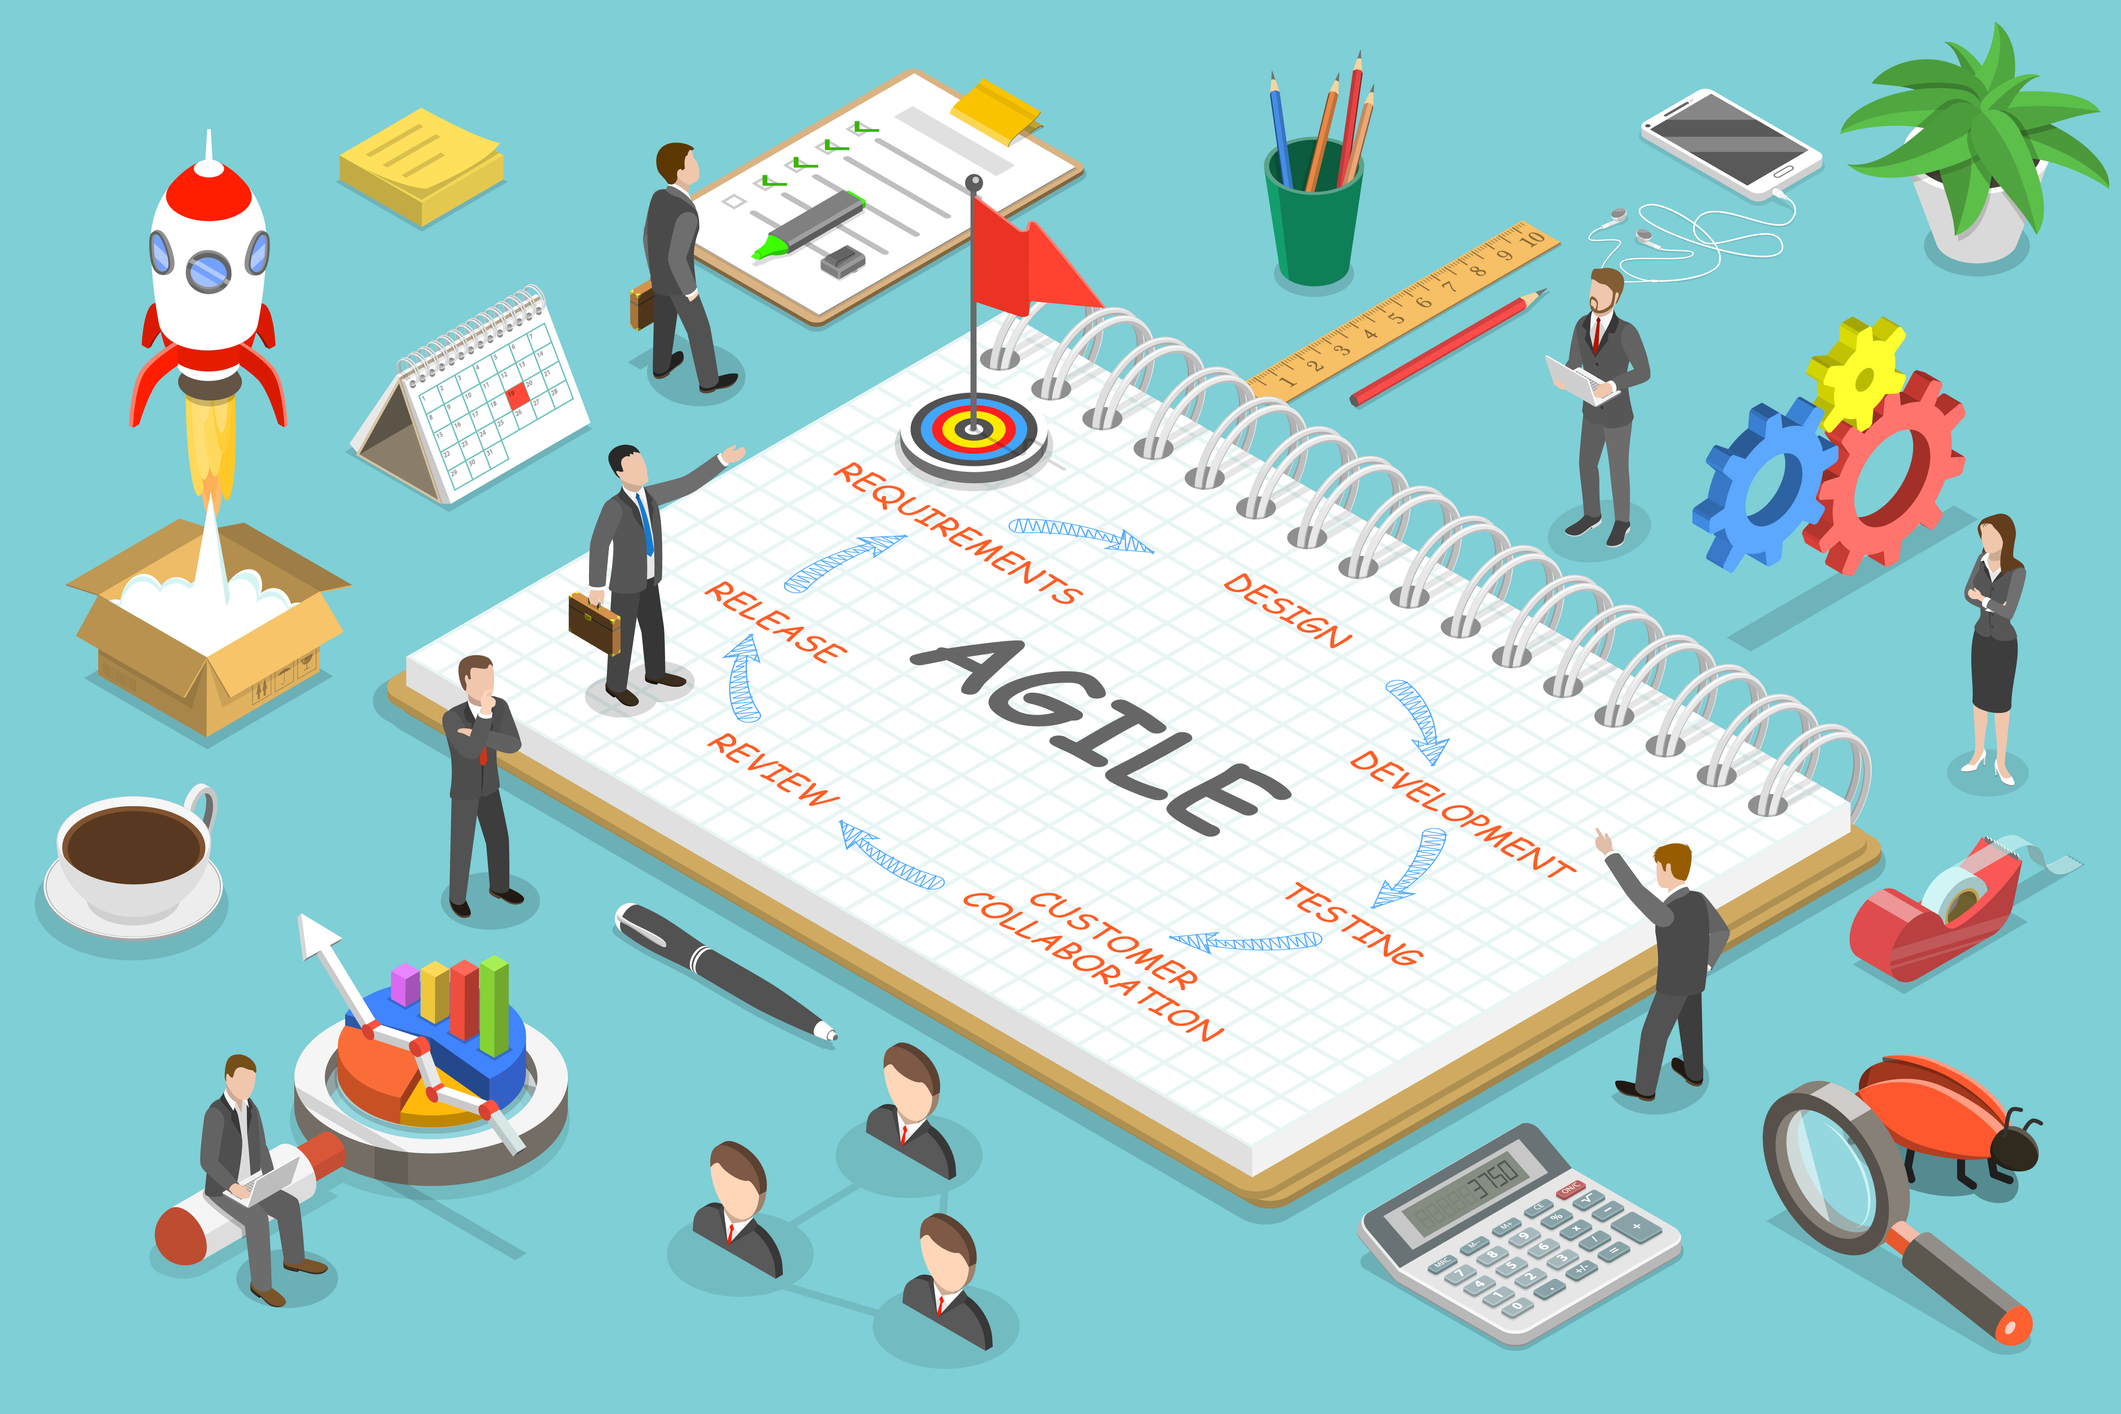 Agile Marketing - How to Become Agile - Criteria for Becoming Agile - Agile Agency